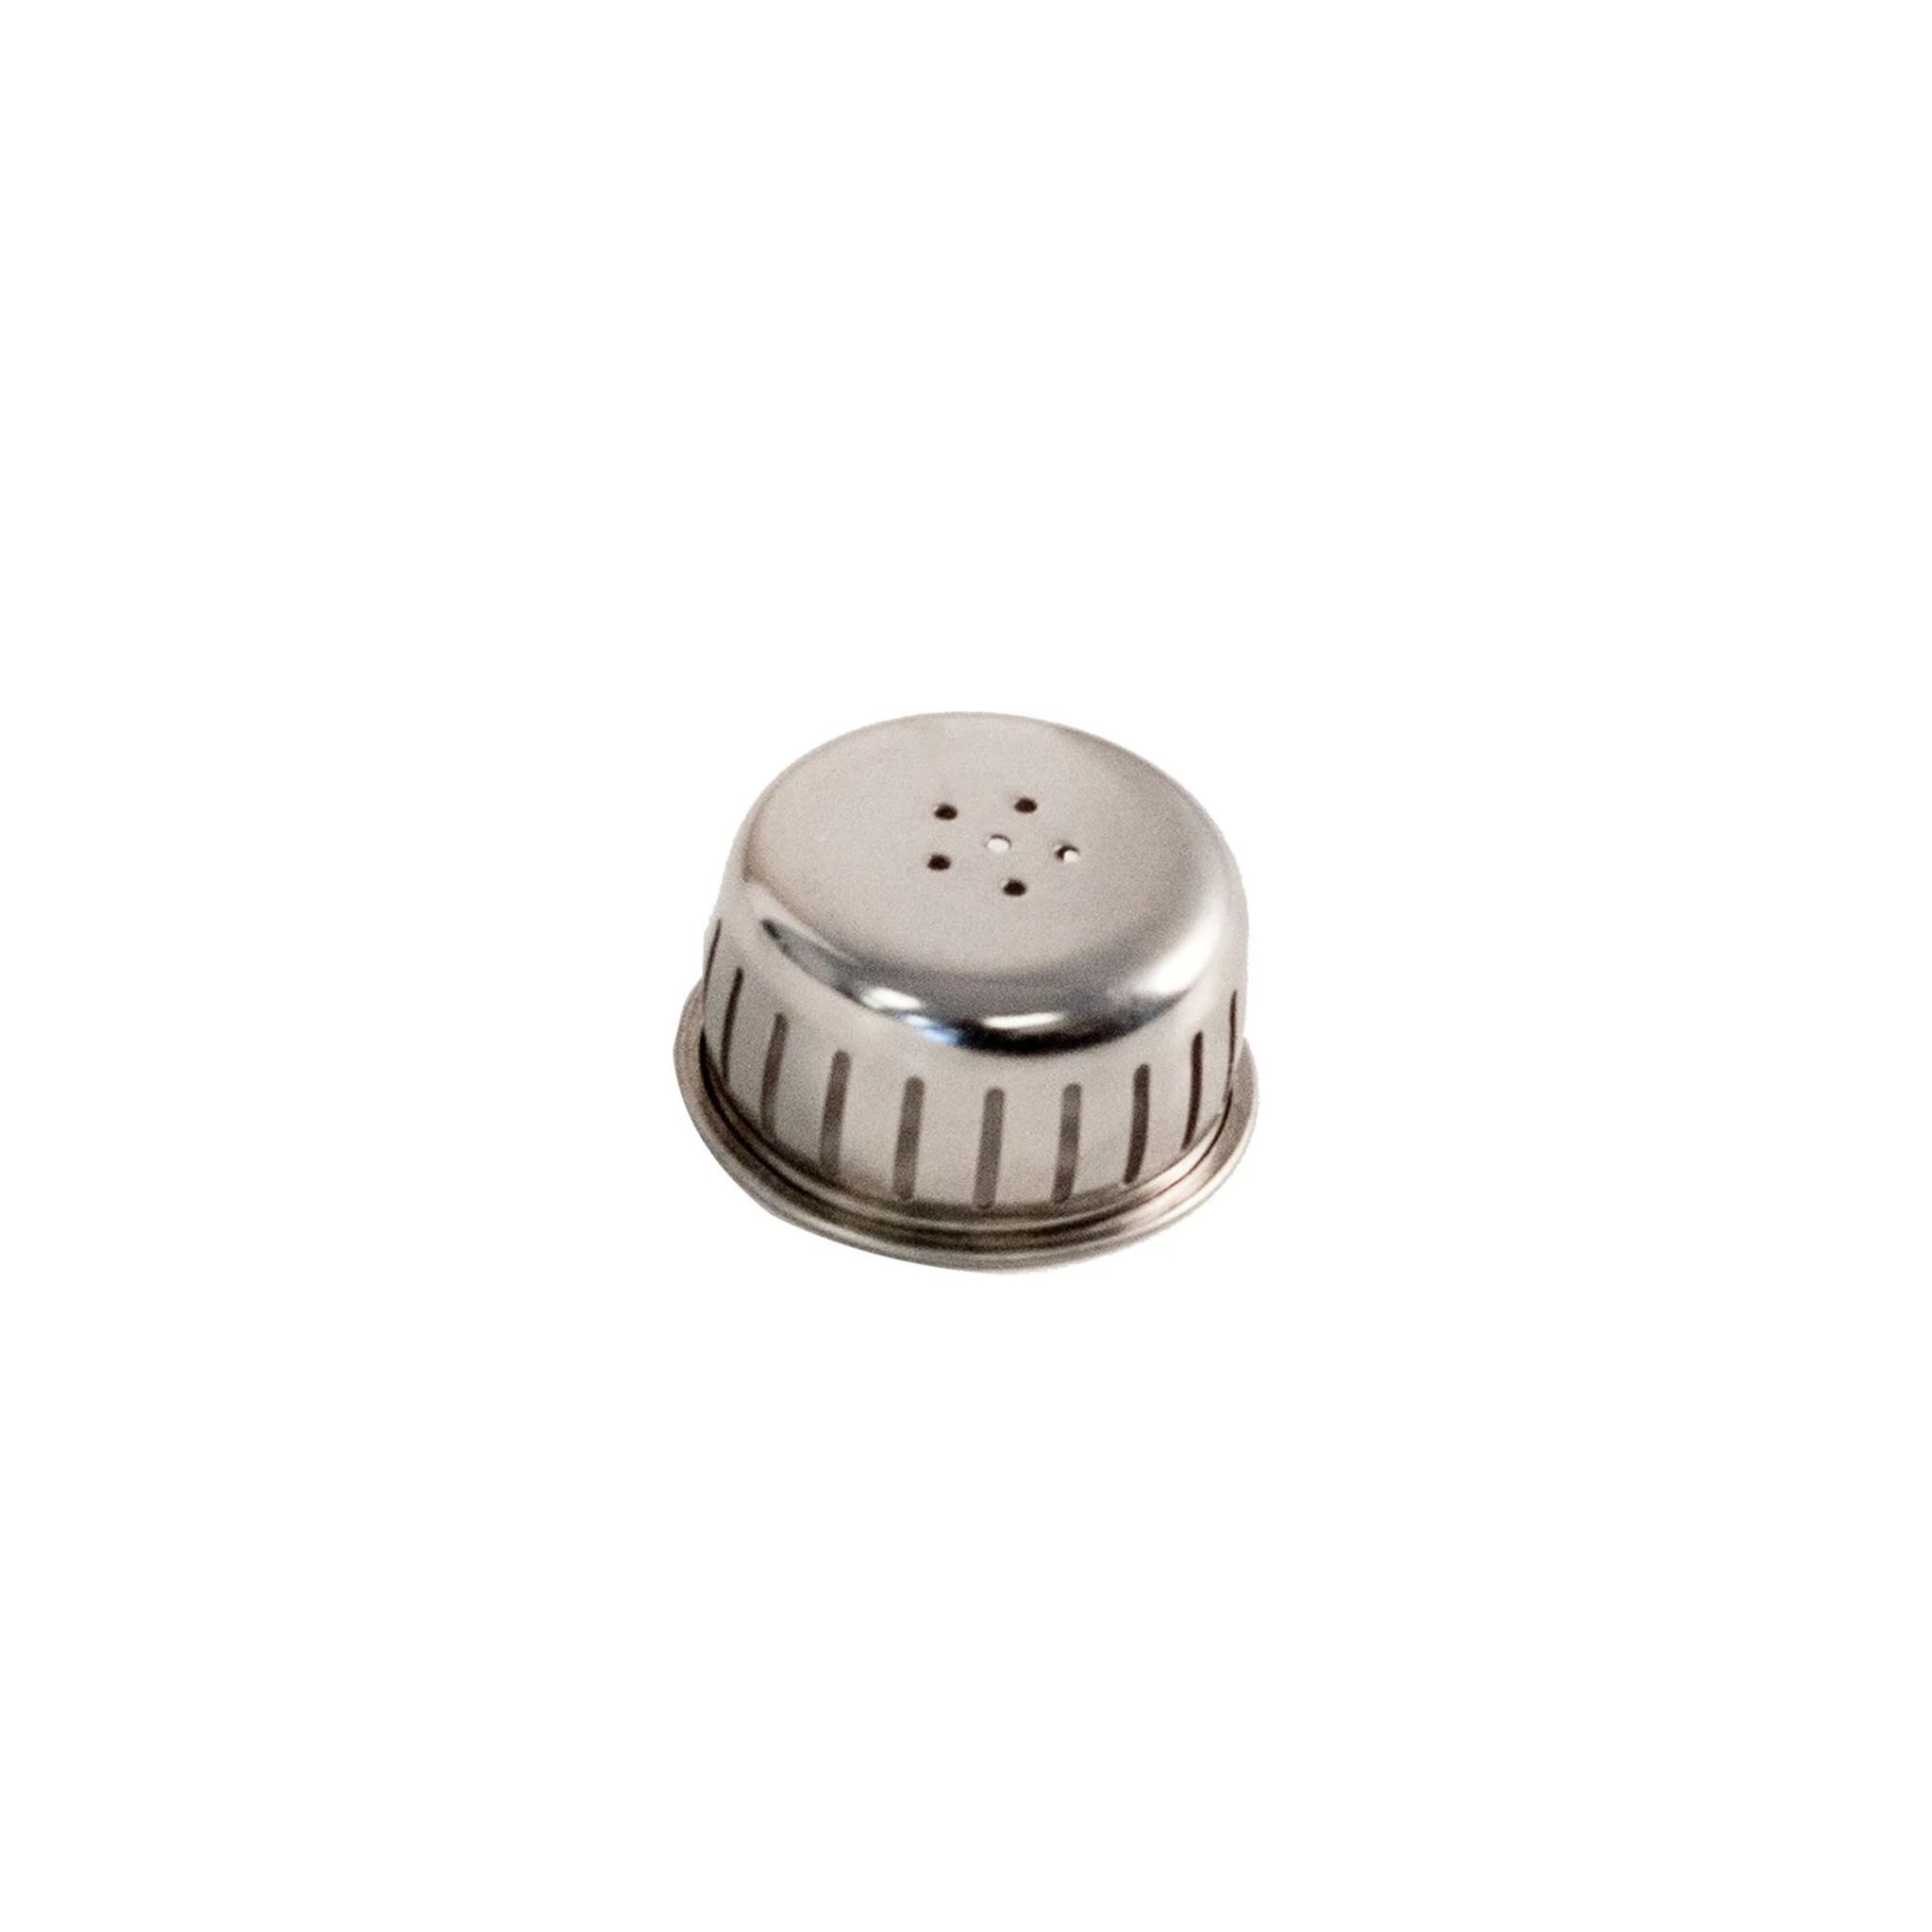 Instant Pot® 3-quart Colour Sealing Ring, 2-pack